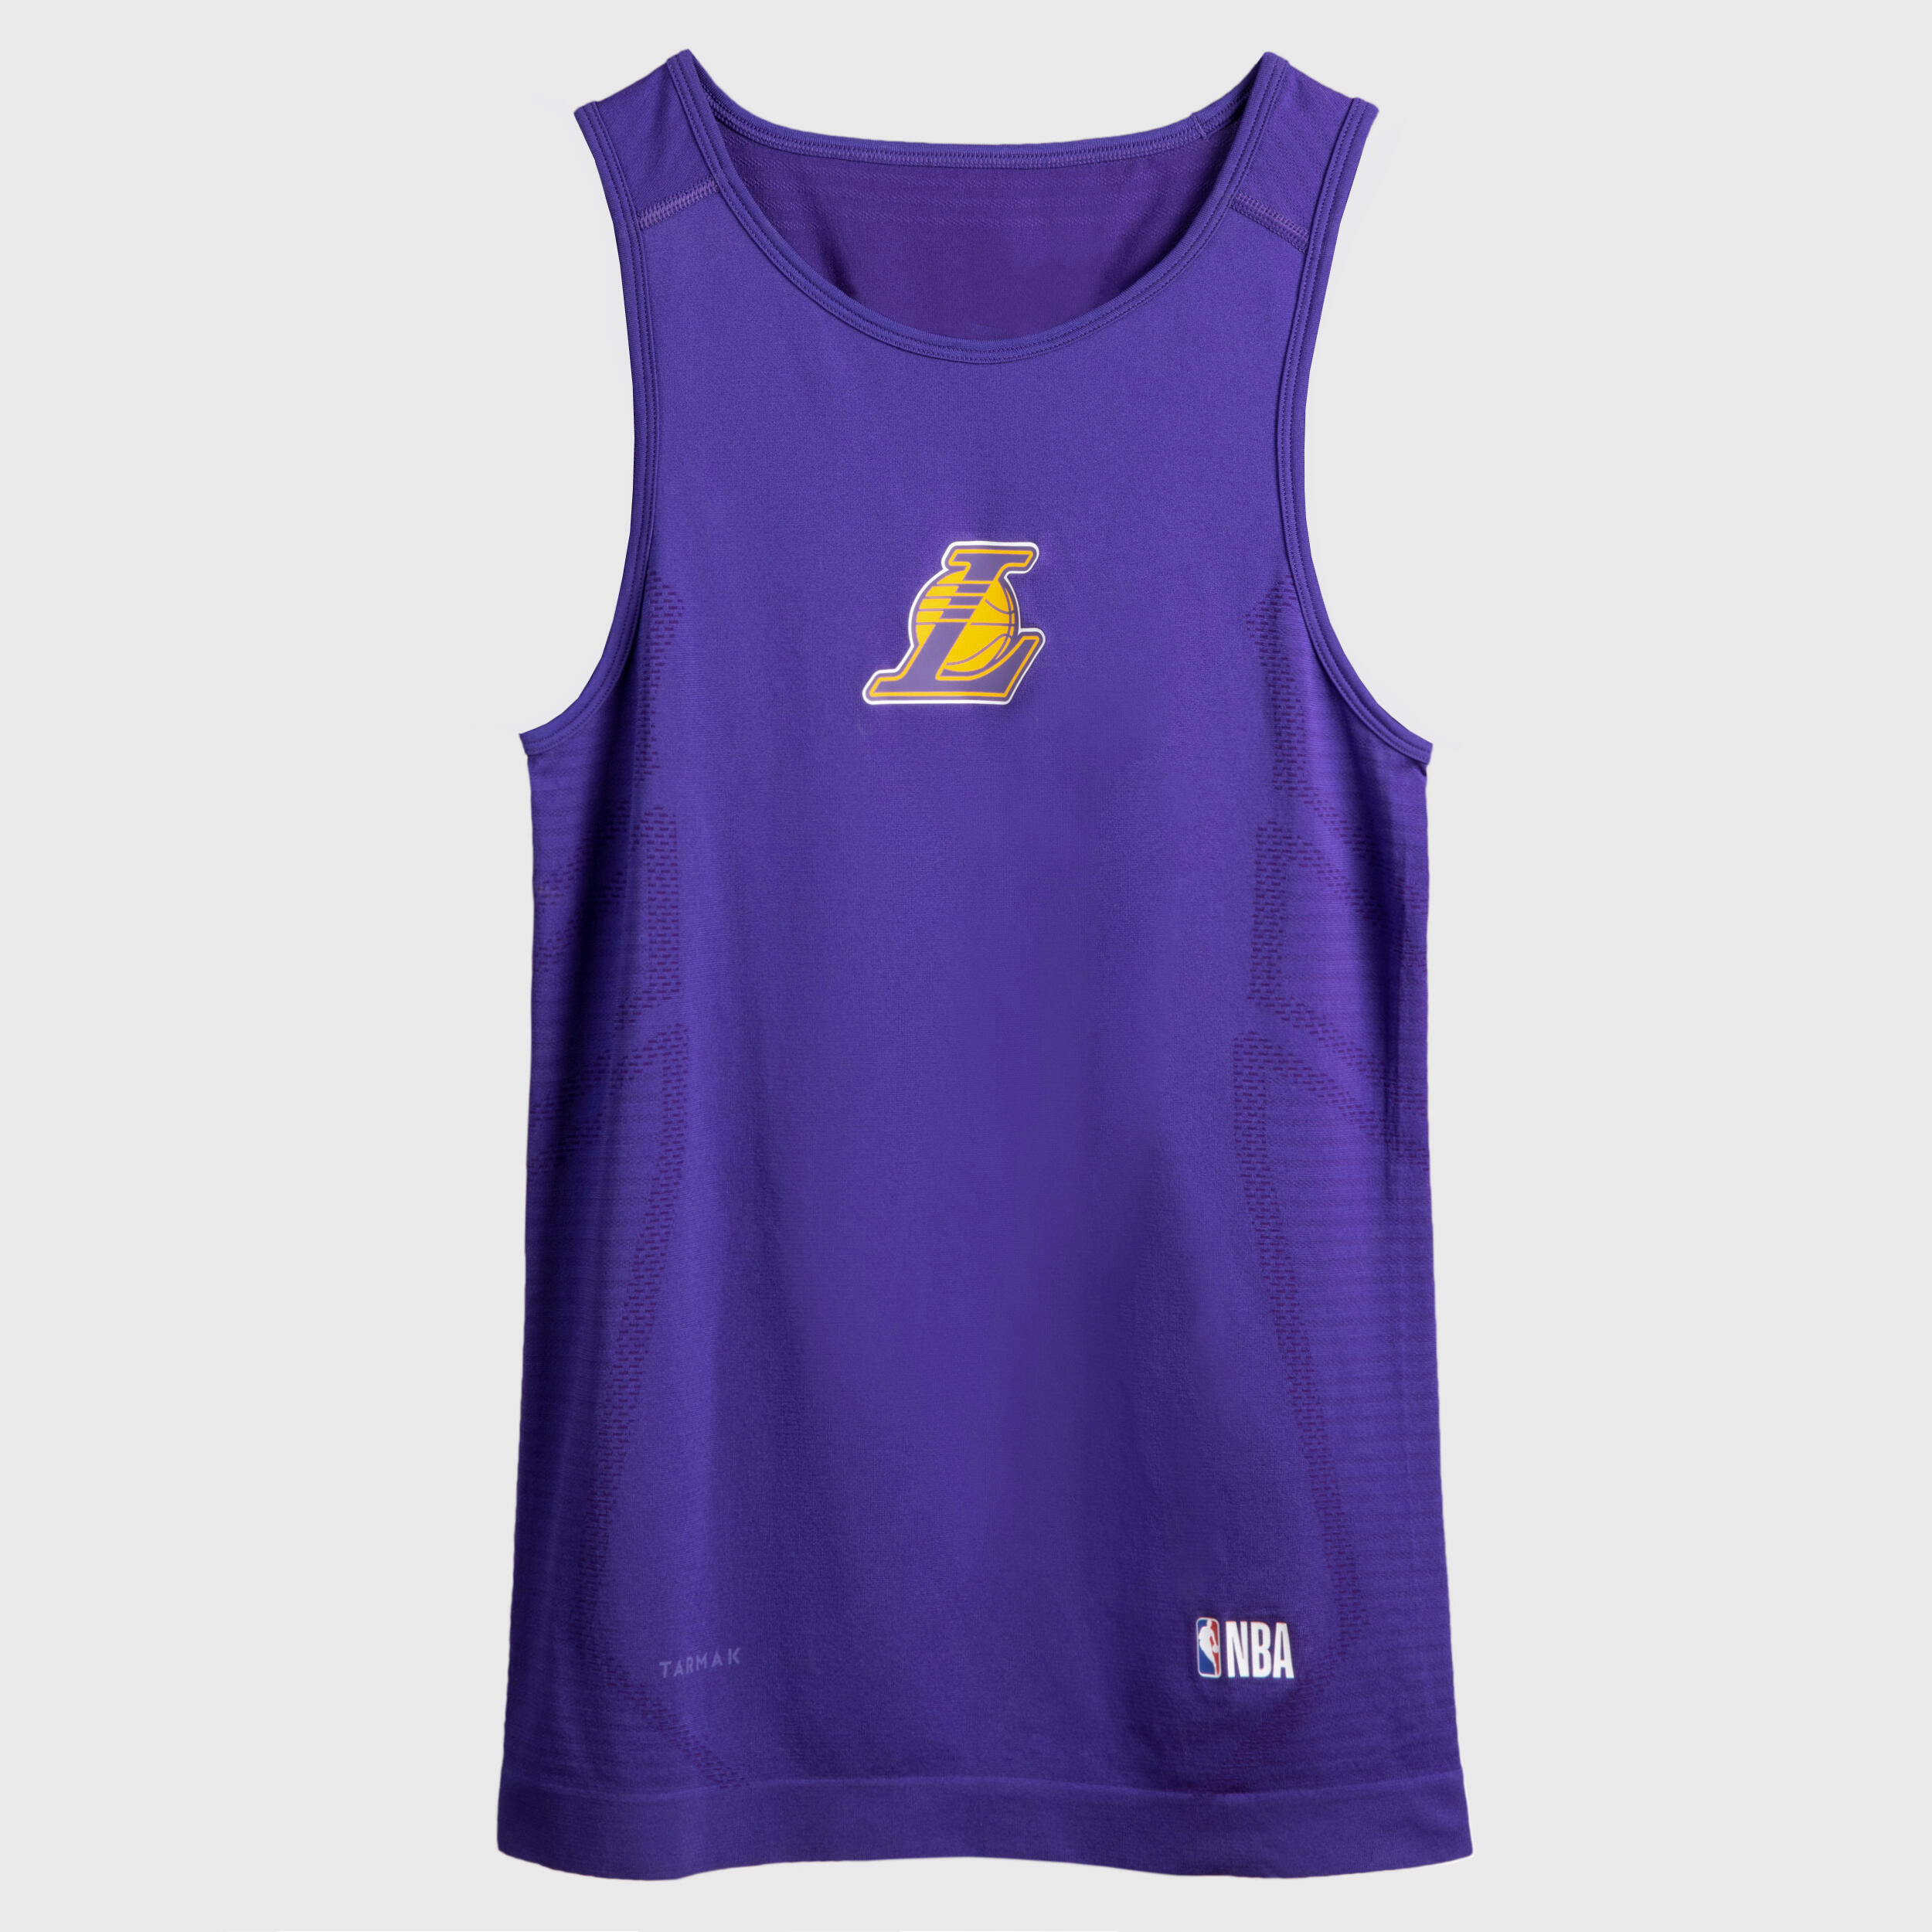 Men's Slim Fit Basketball Base Layer Jersey UT500 - NBA Los Angeles Lakers 2/10